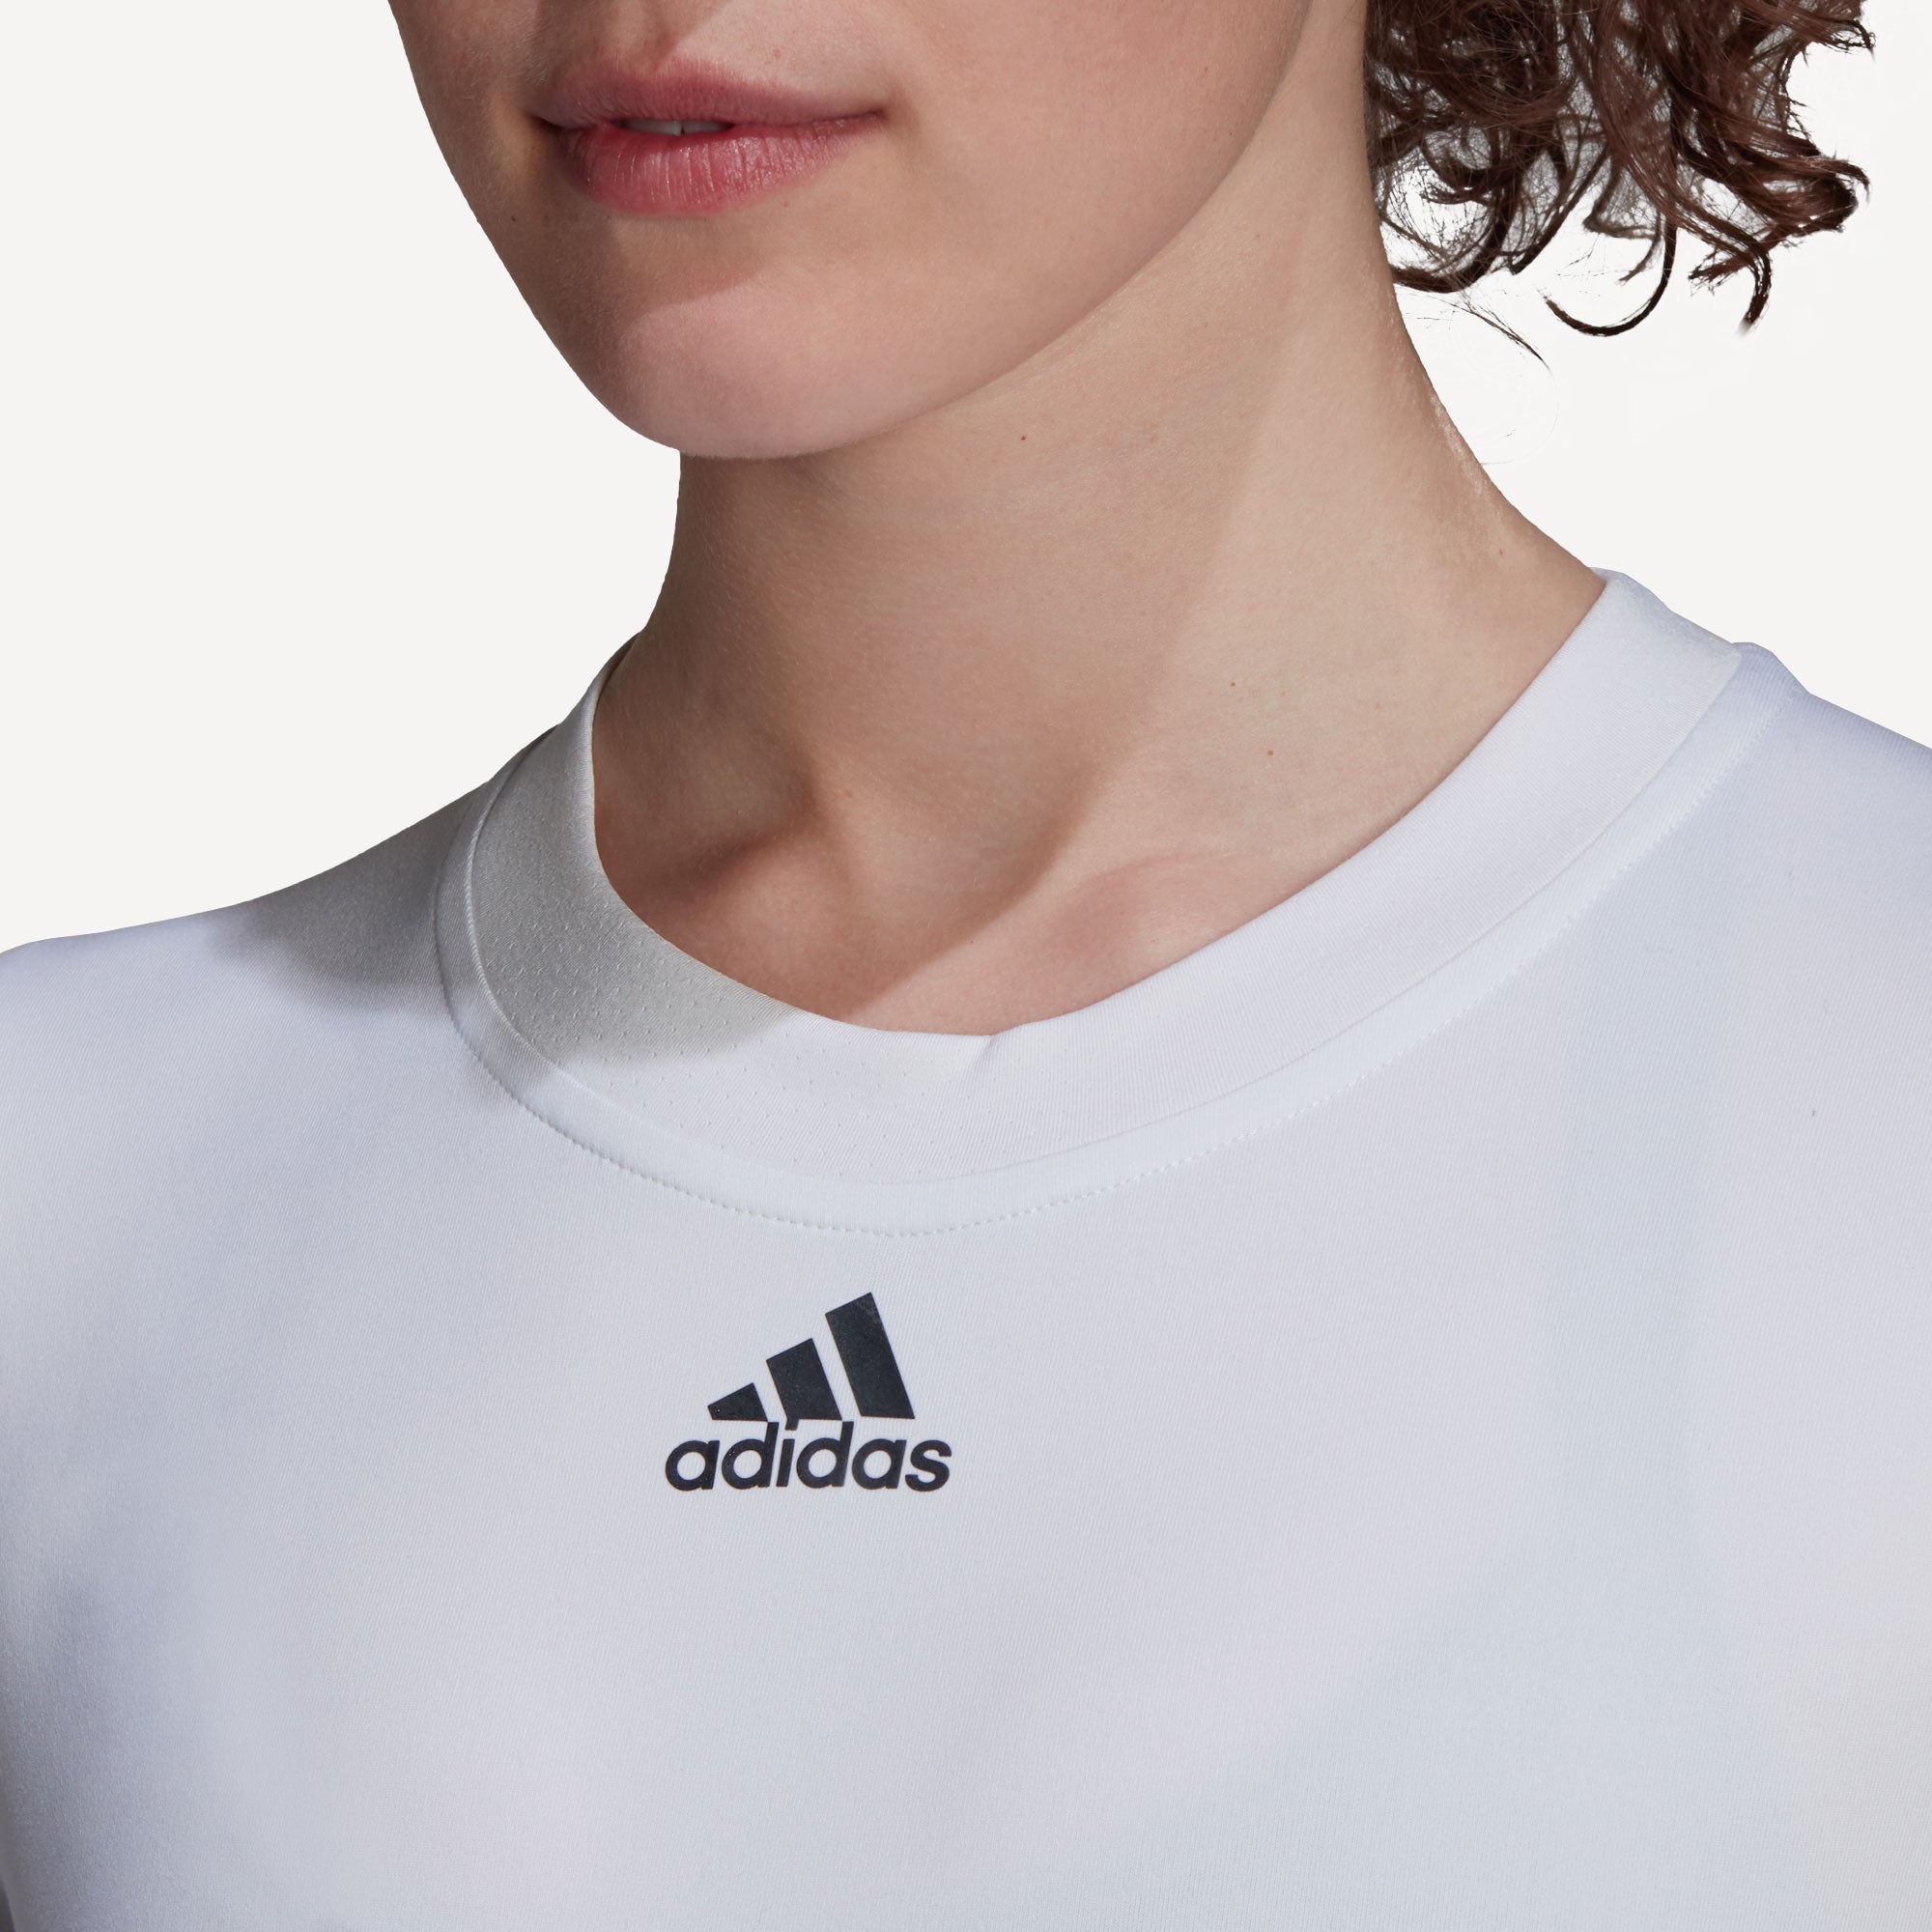 adidas Freelift Women's Long-Sleeve Tennis Top White (4)